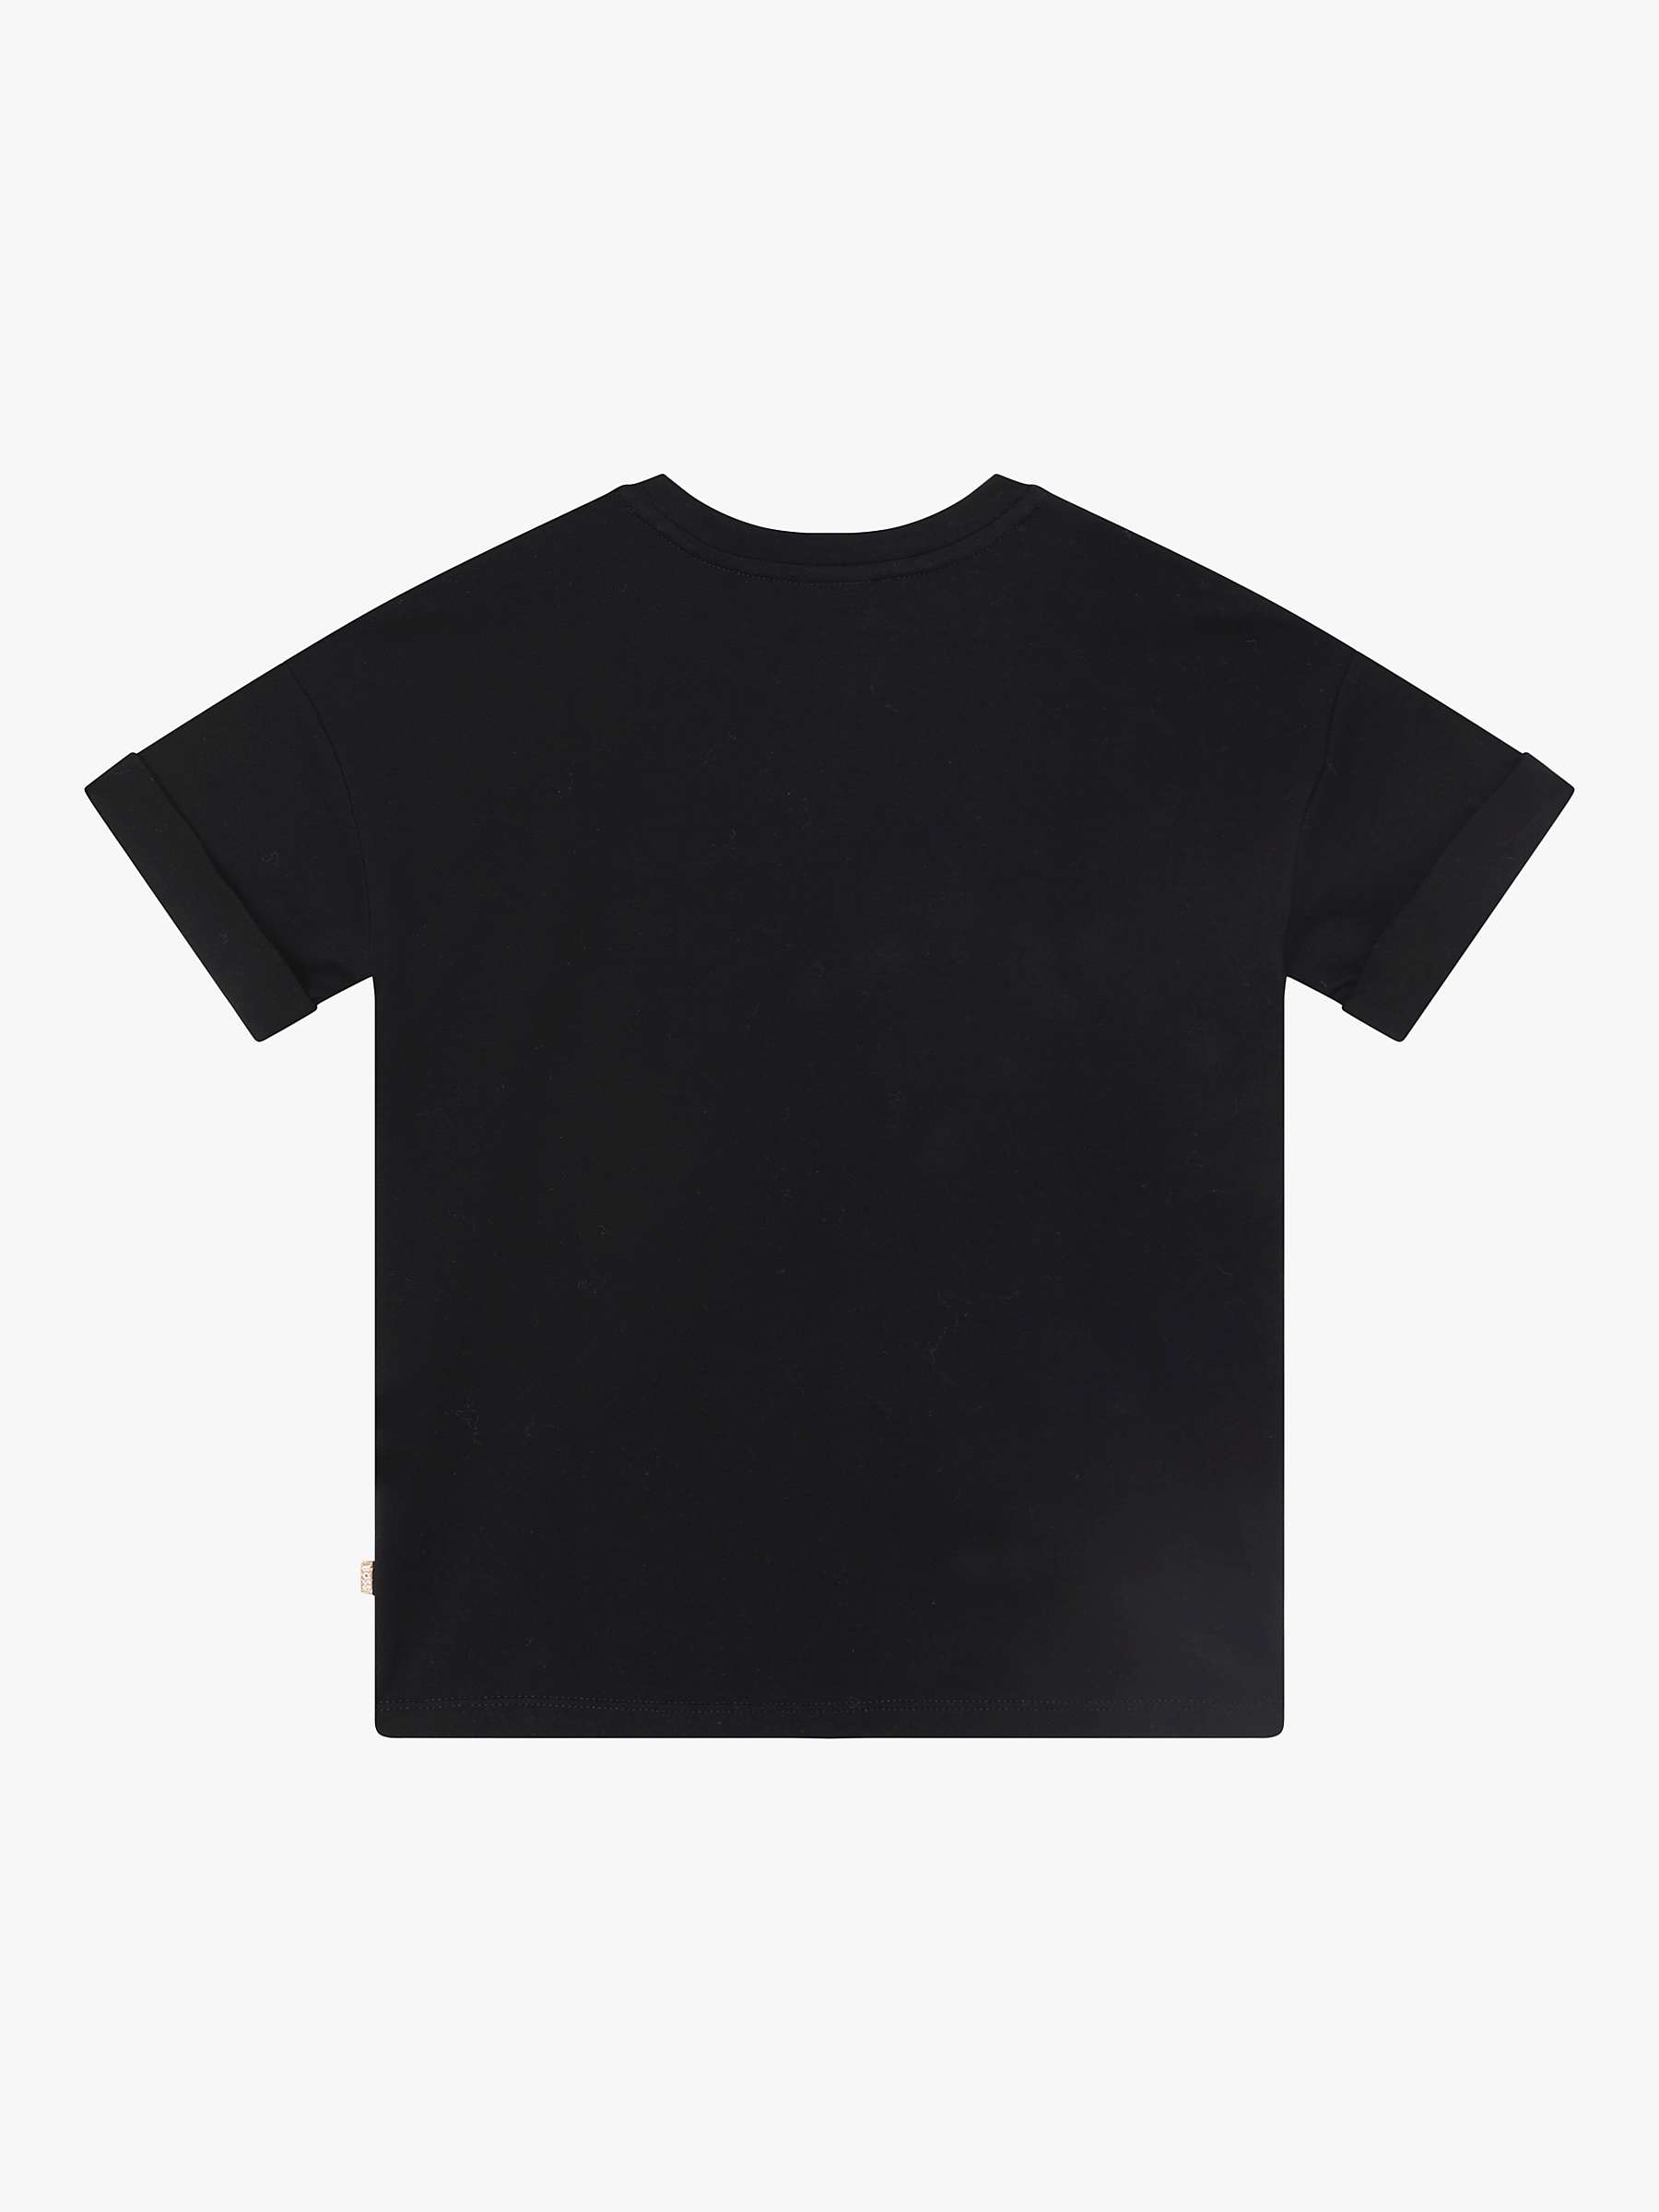 Buy BOSS Kids' Short Sleeve T-Shirt, Black Online at johnlewis.com